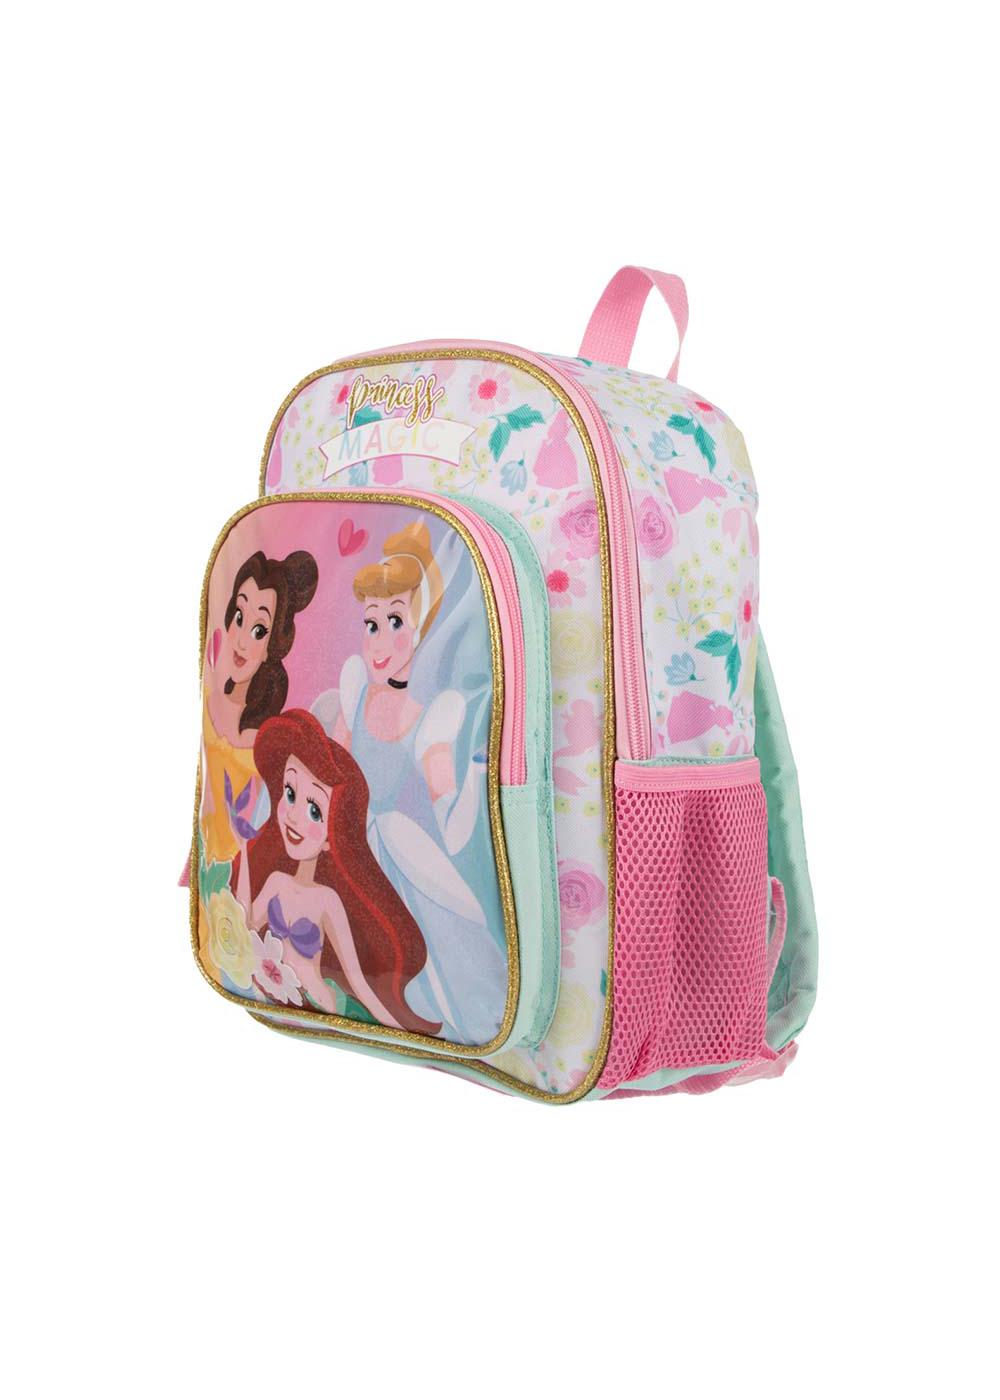 Bioworld Disney Princess Magic Toddler Backpack; image 3 of 3